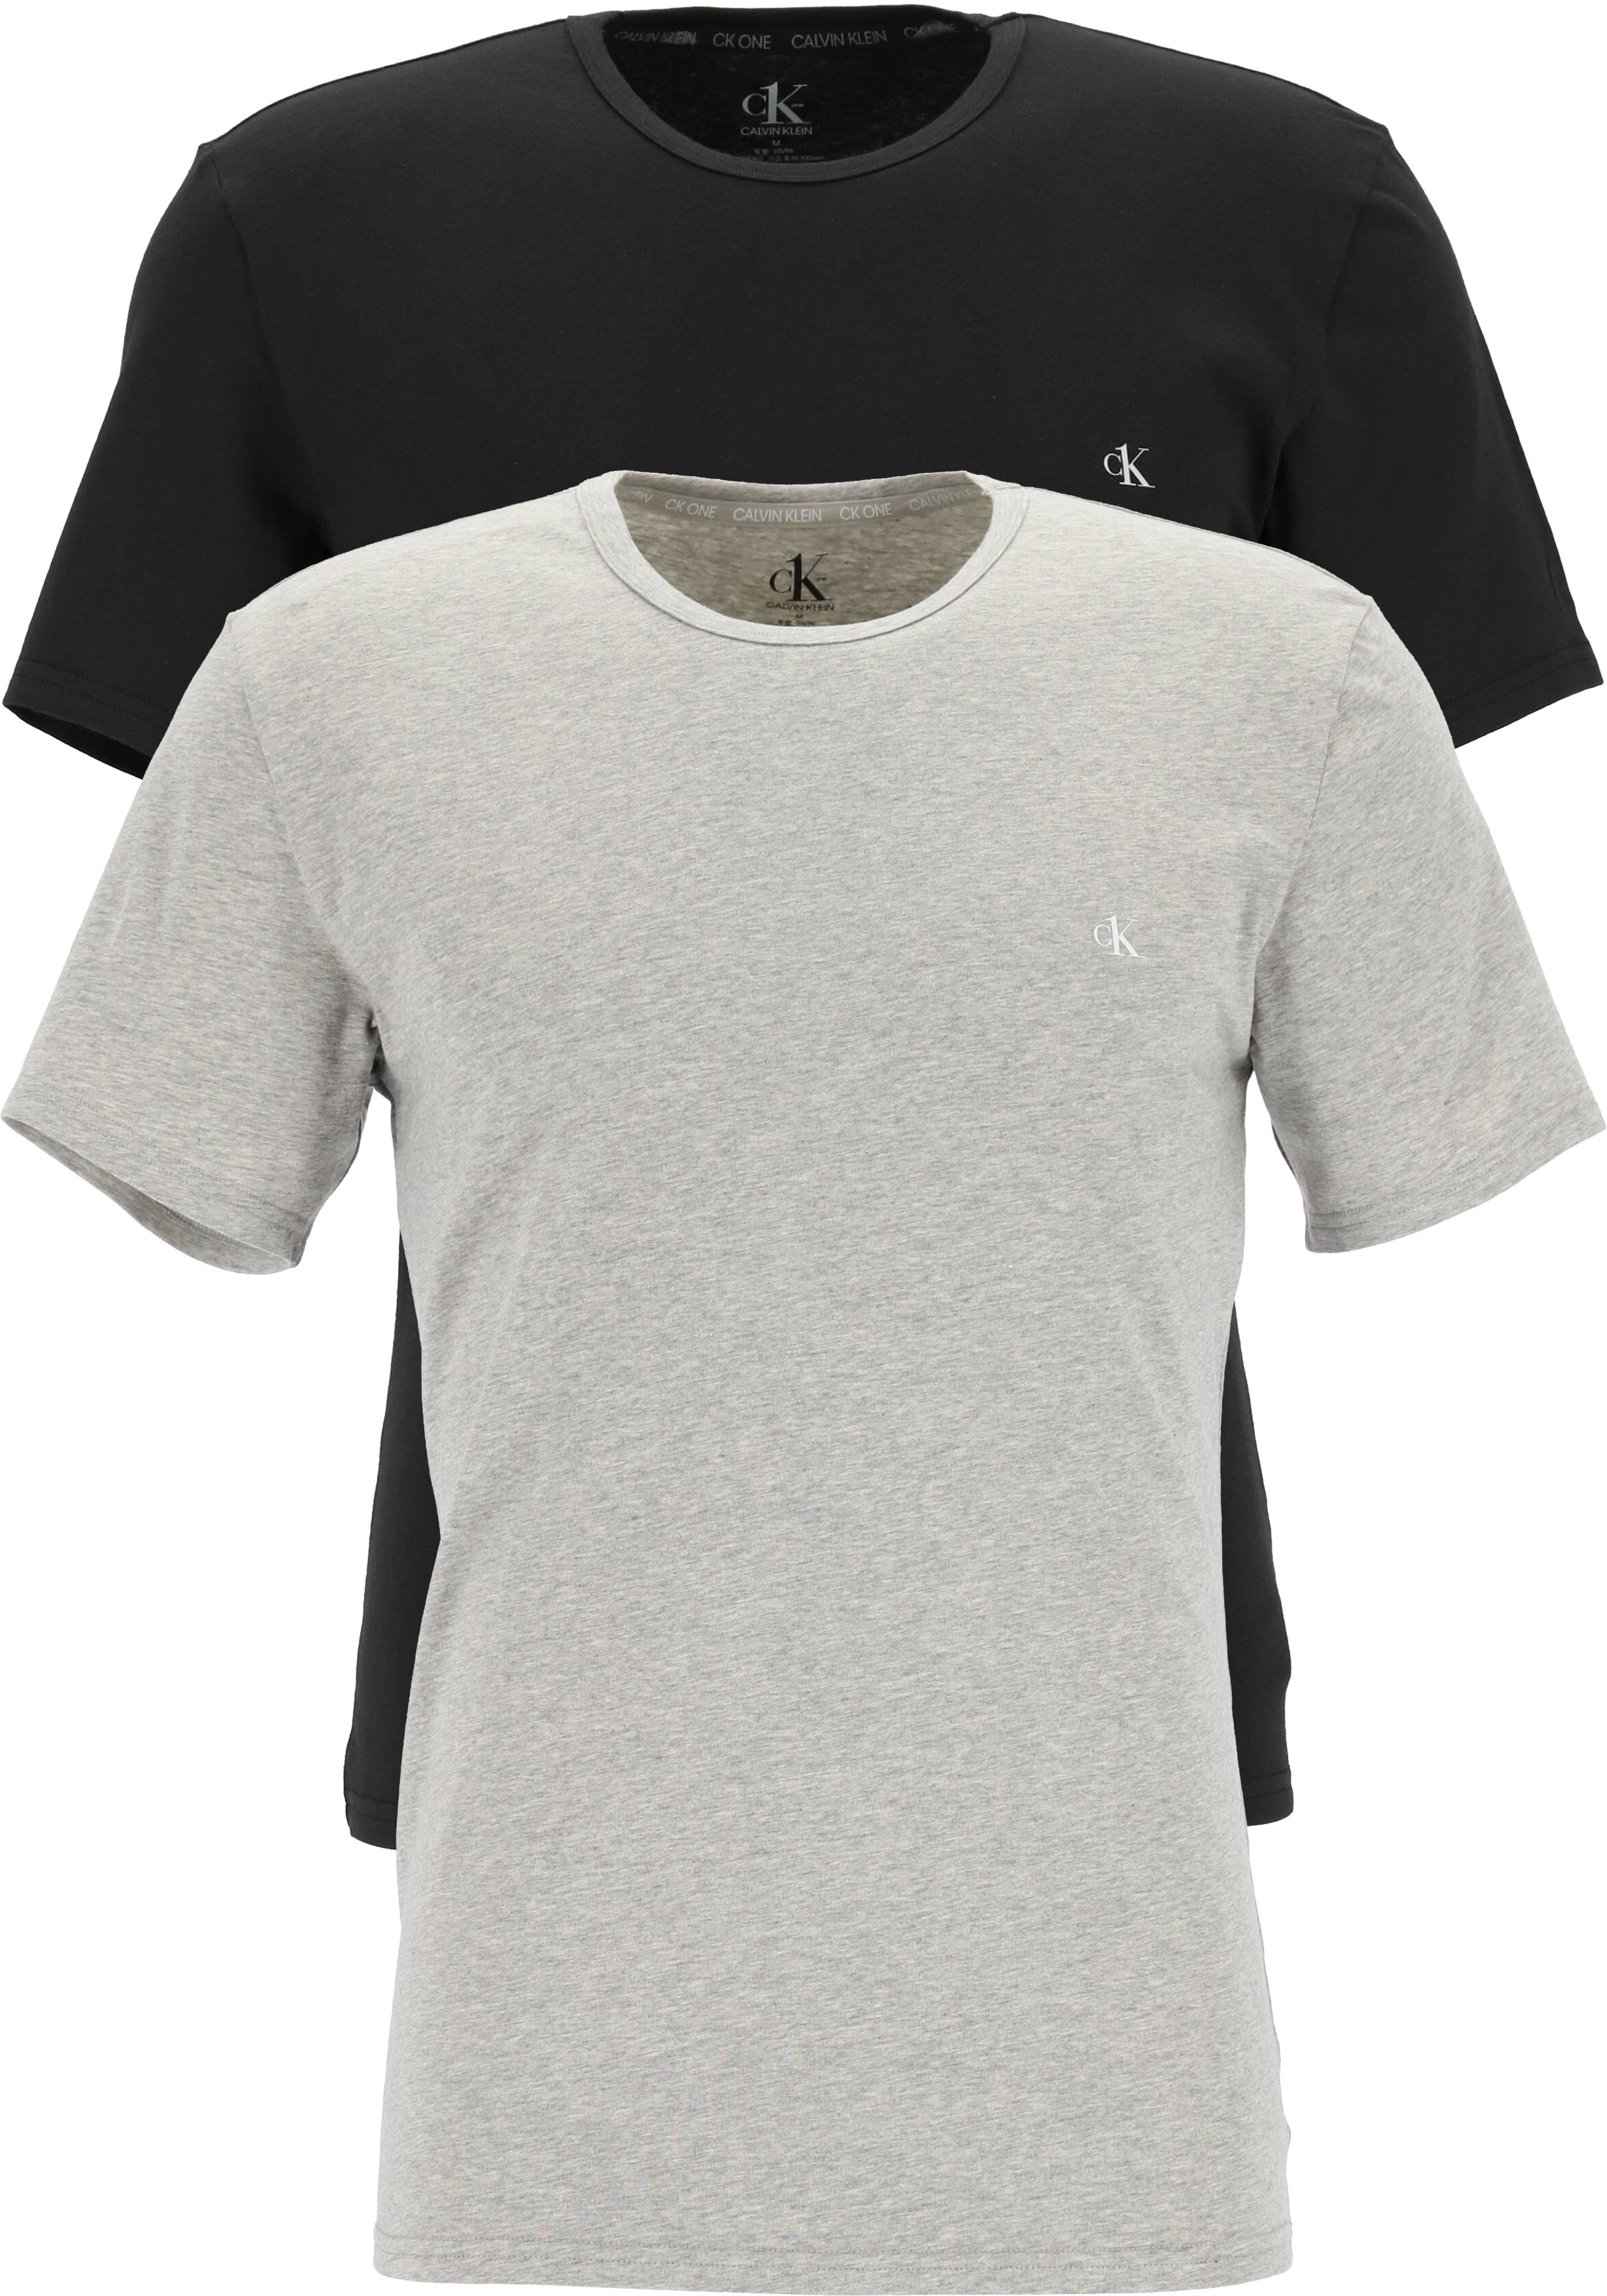 Calvin Klein CK ONE crew neck T-shirts (2-pack), T-shirts... Shop nieuwste voorjaarsmode